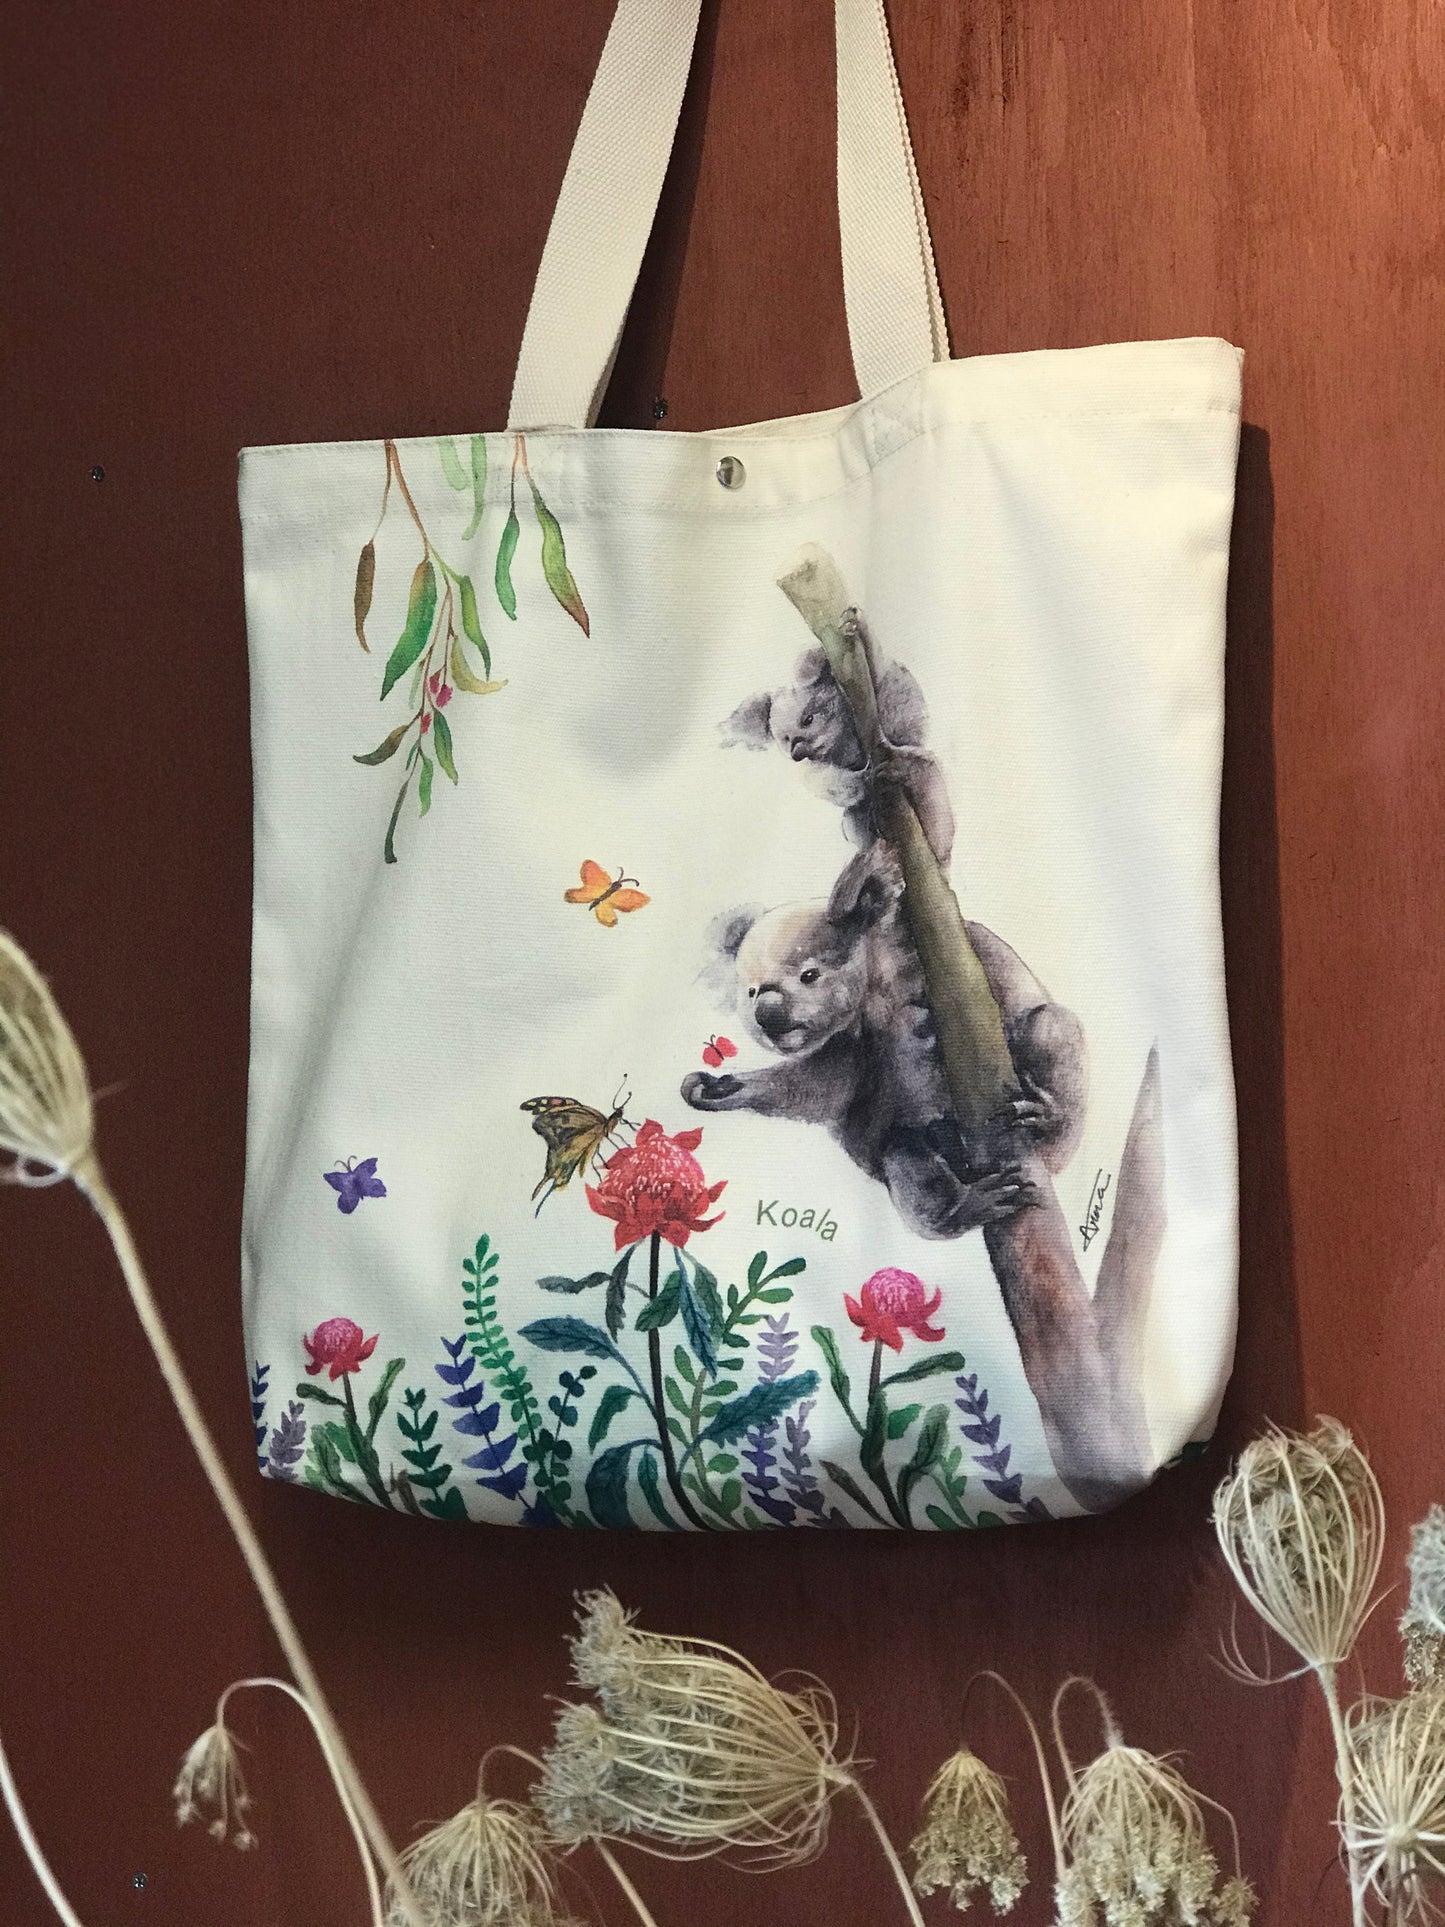 Koala Tote Bag,art bag,gift,Australian animal